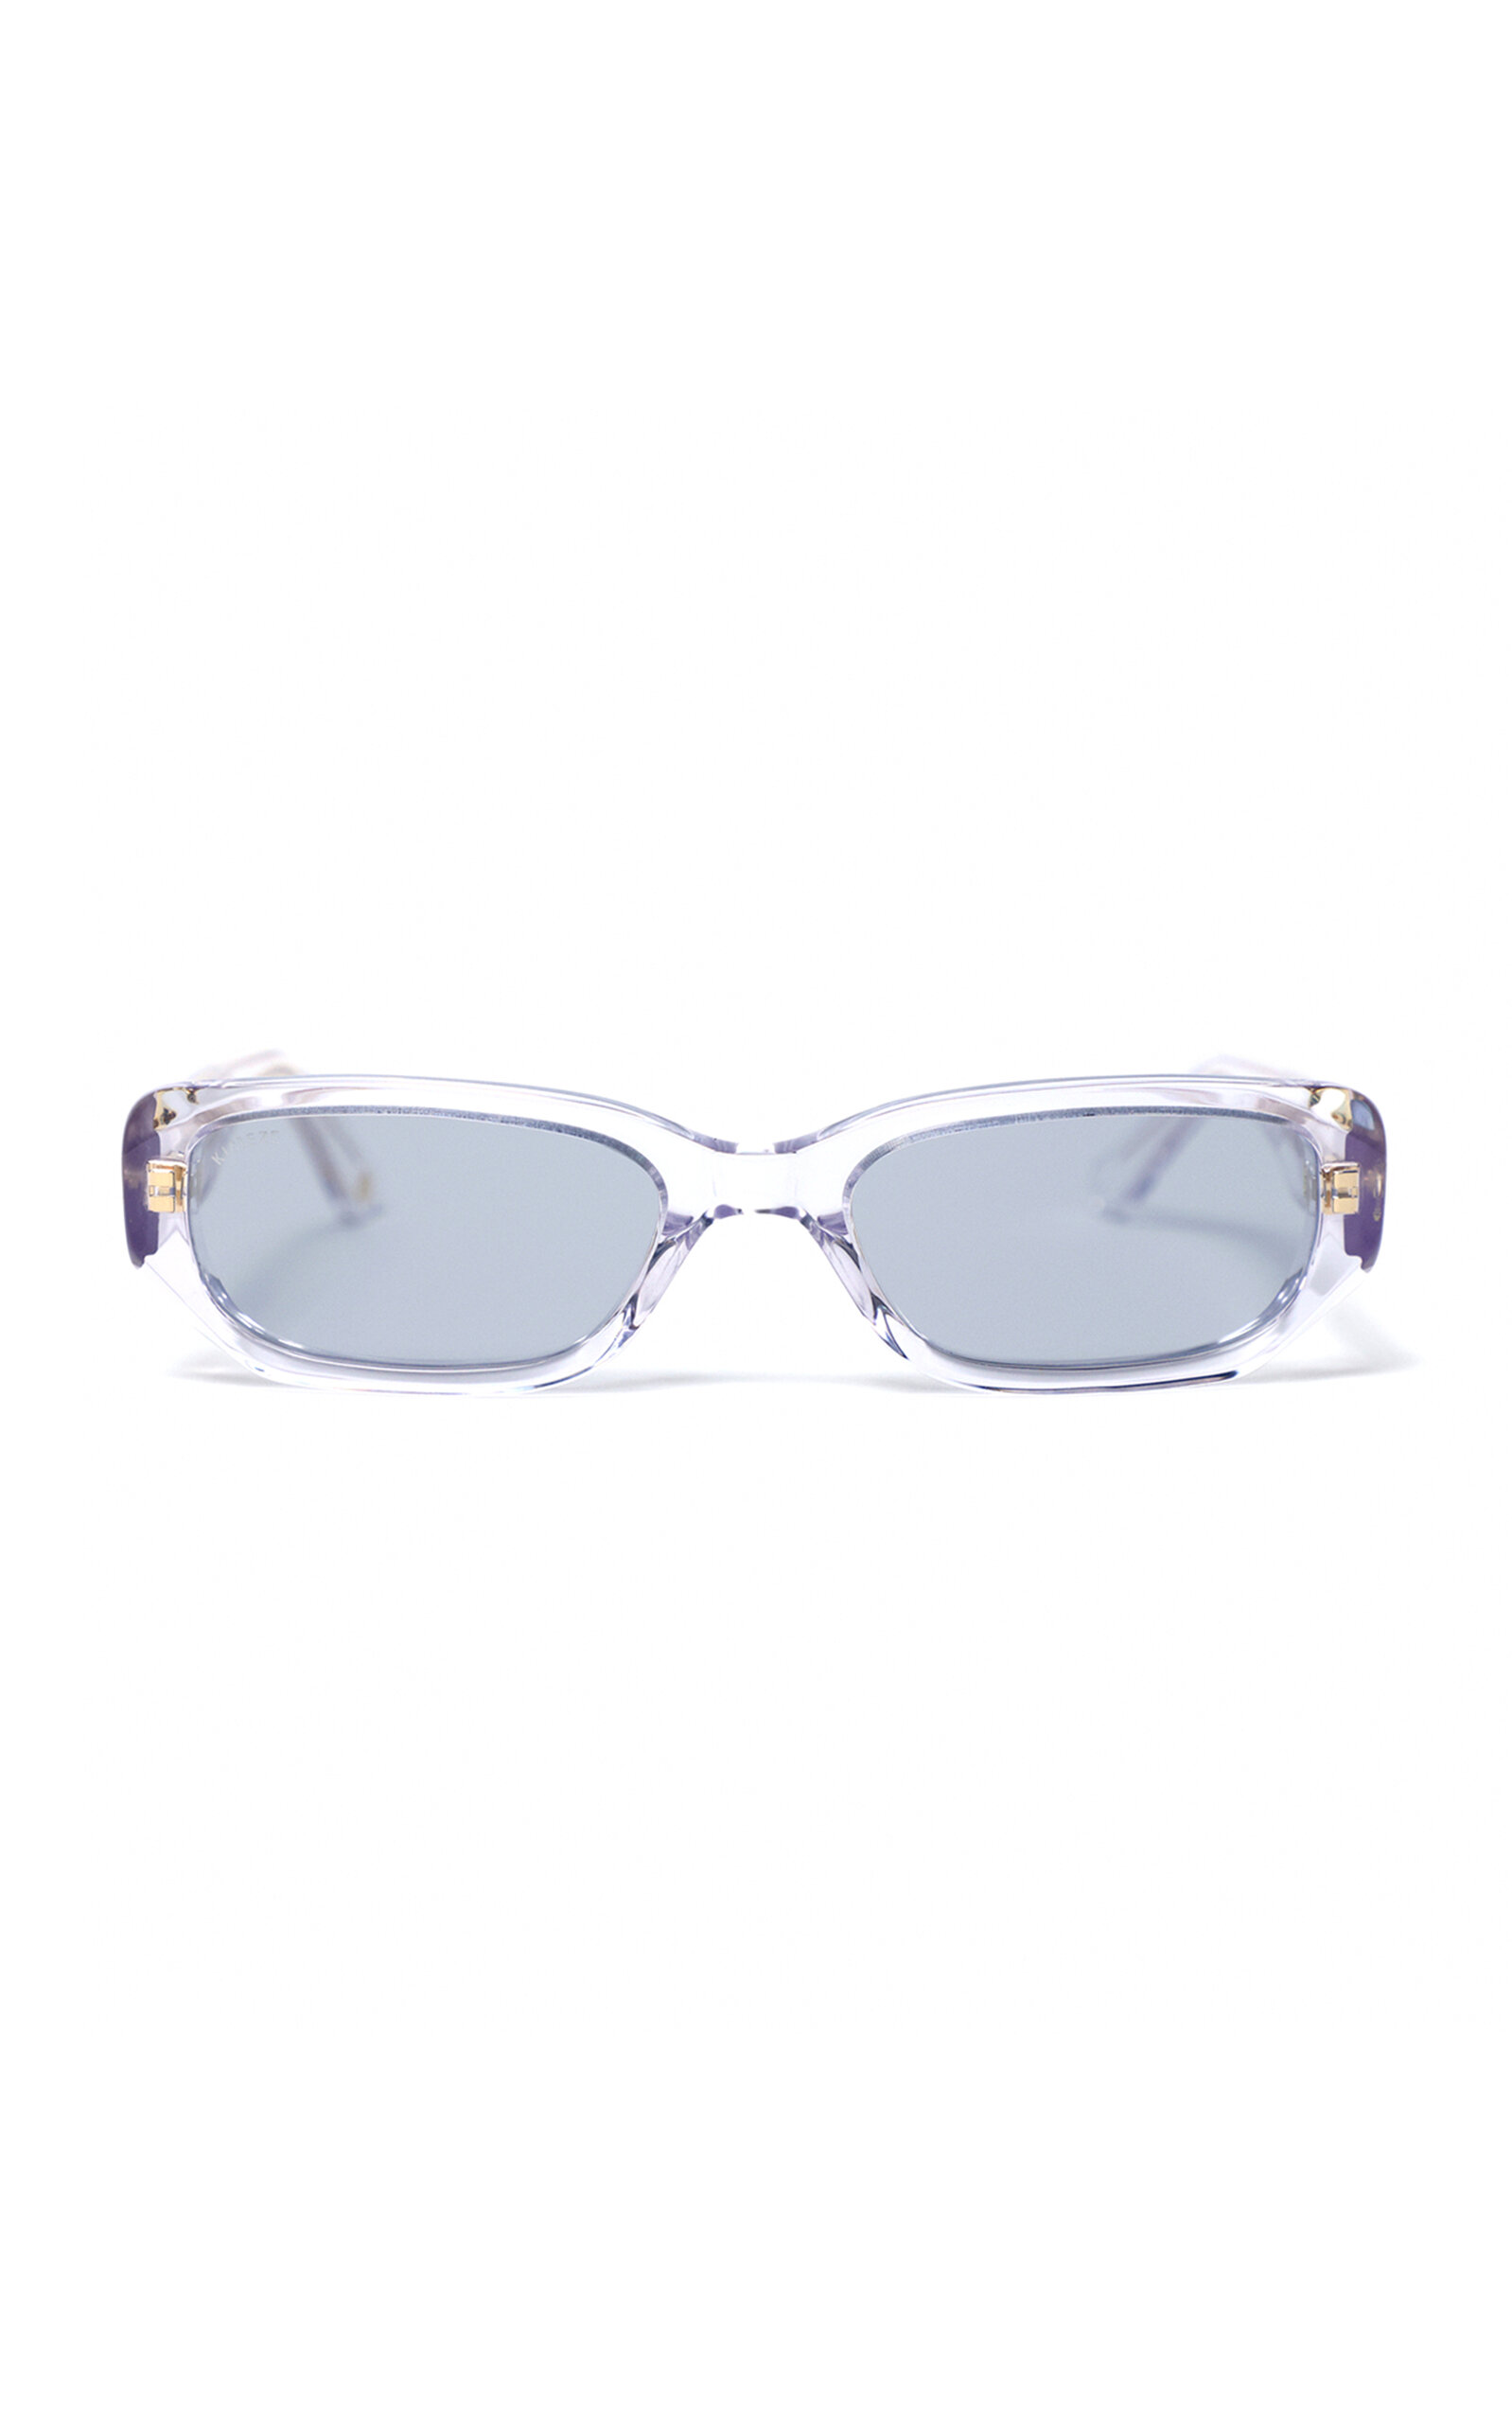 Malibu - Rectangle Clear Frame Prescription Sunglasses | Eyebuydirect Canada